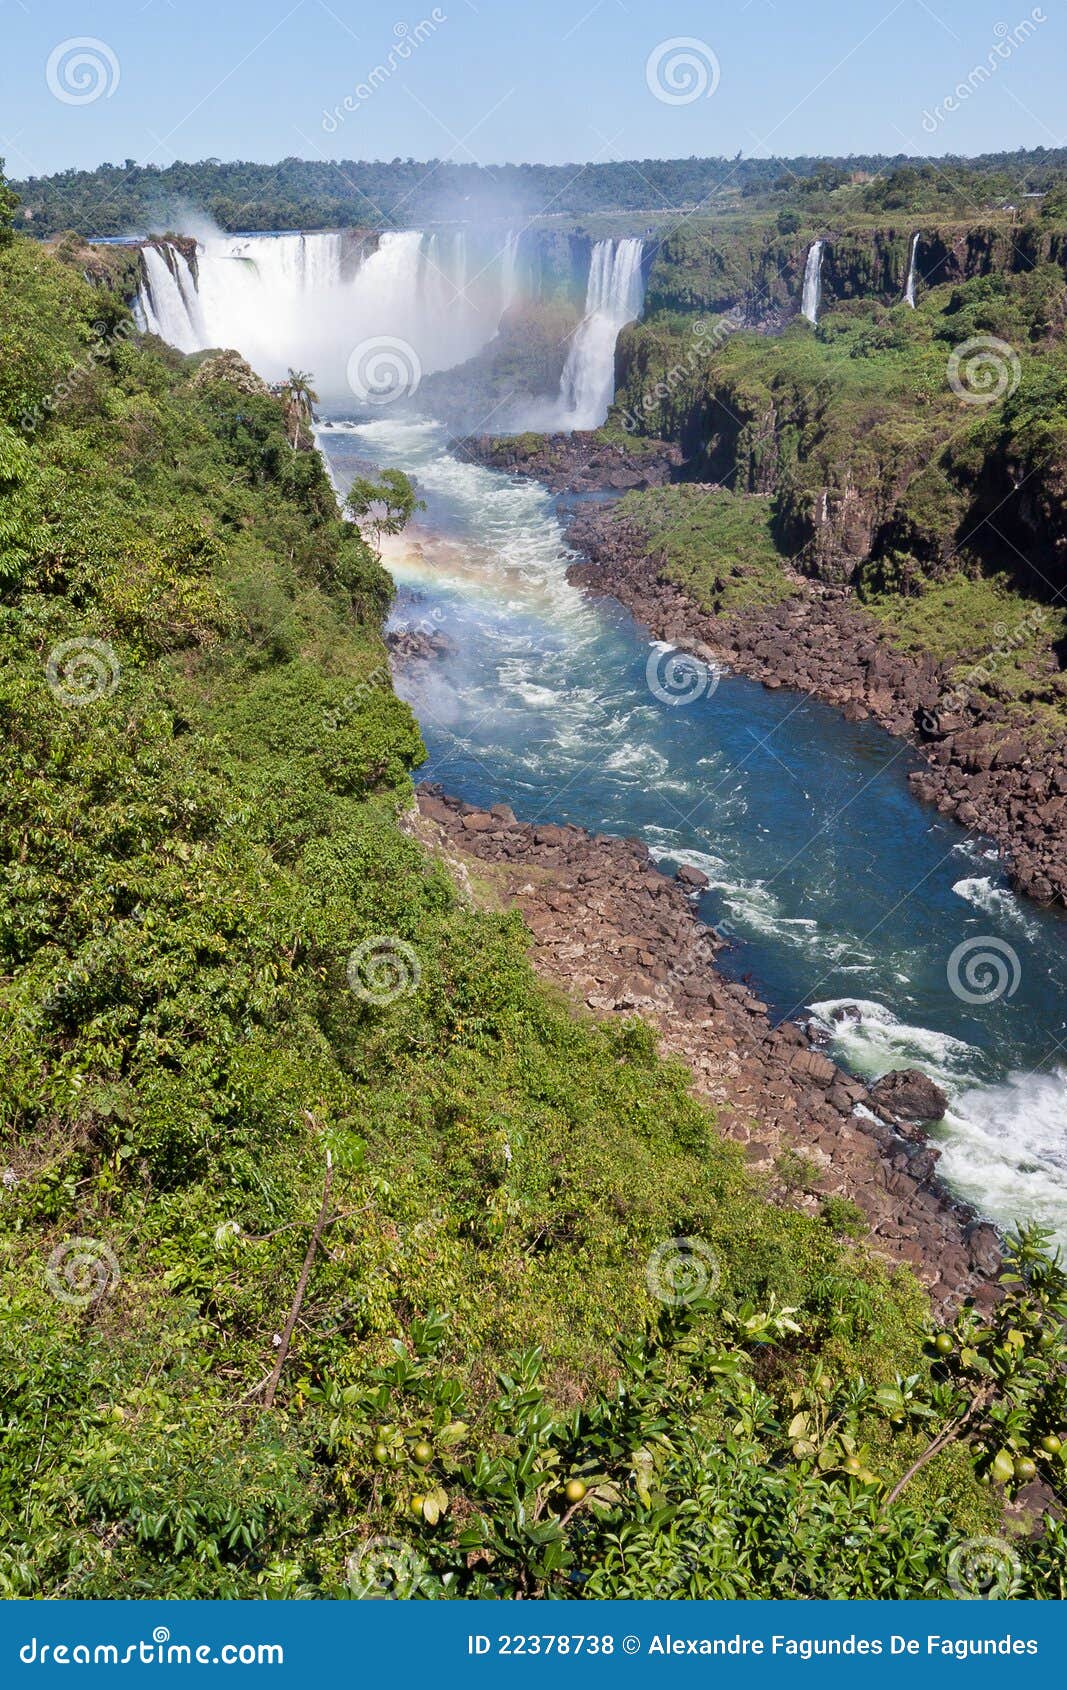 iguassu falls canyon argentina and brazil